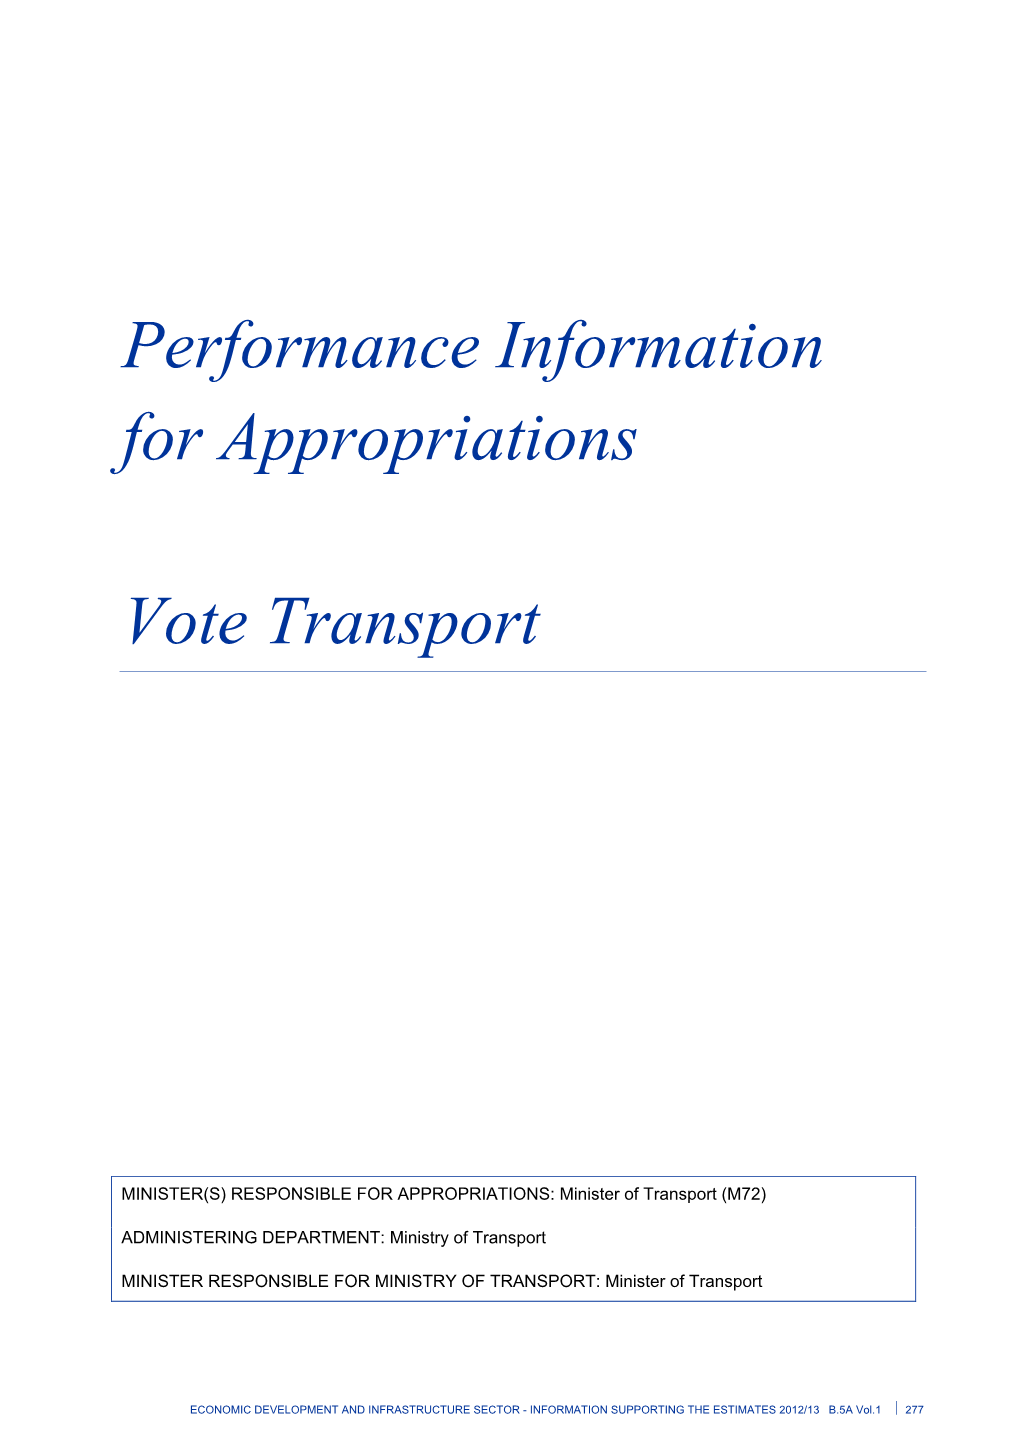 Vote Transport